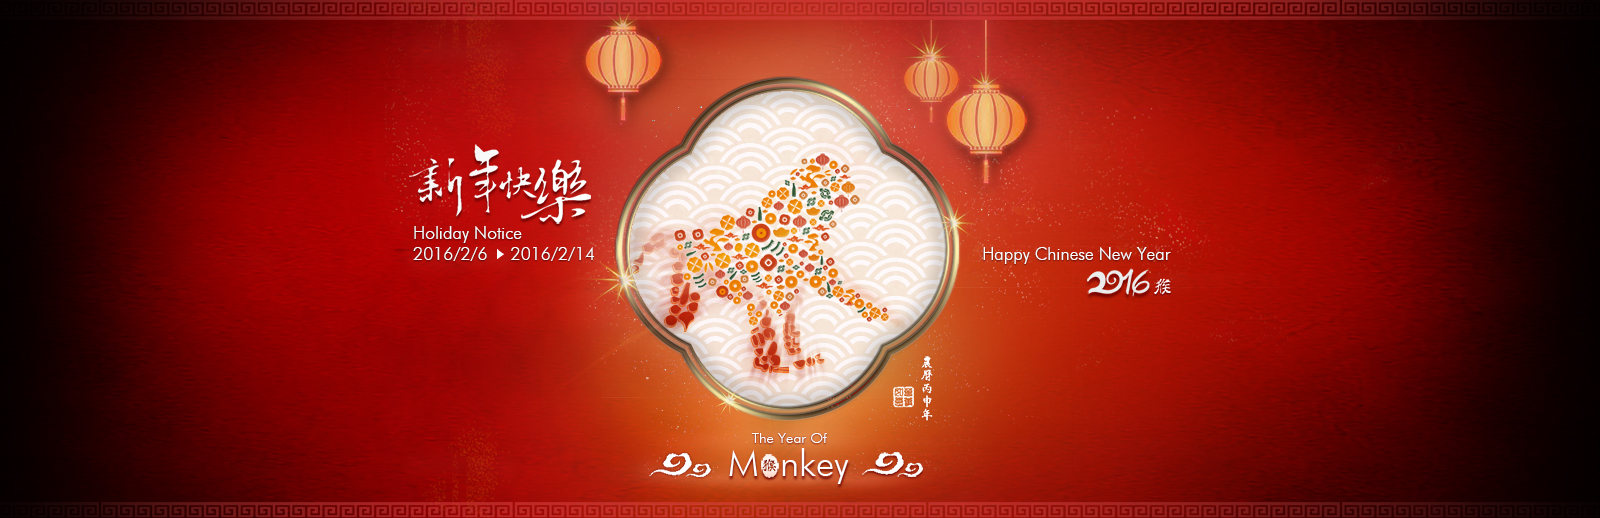 2015 Happy Chinese New Year